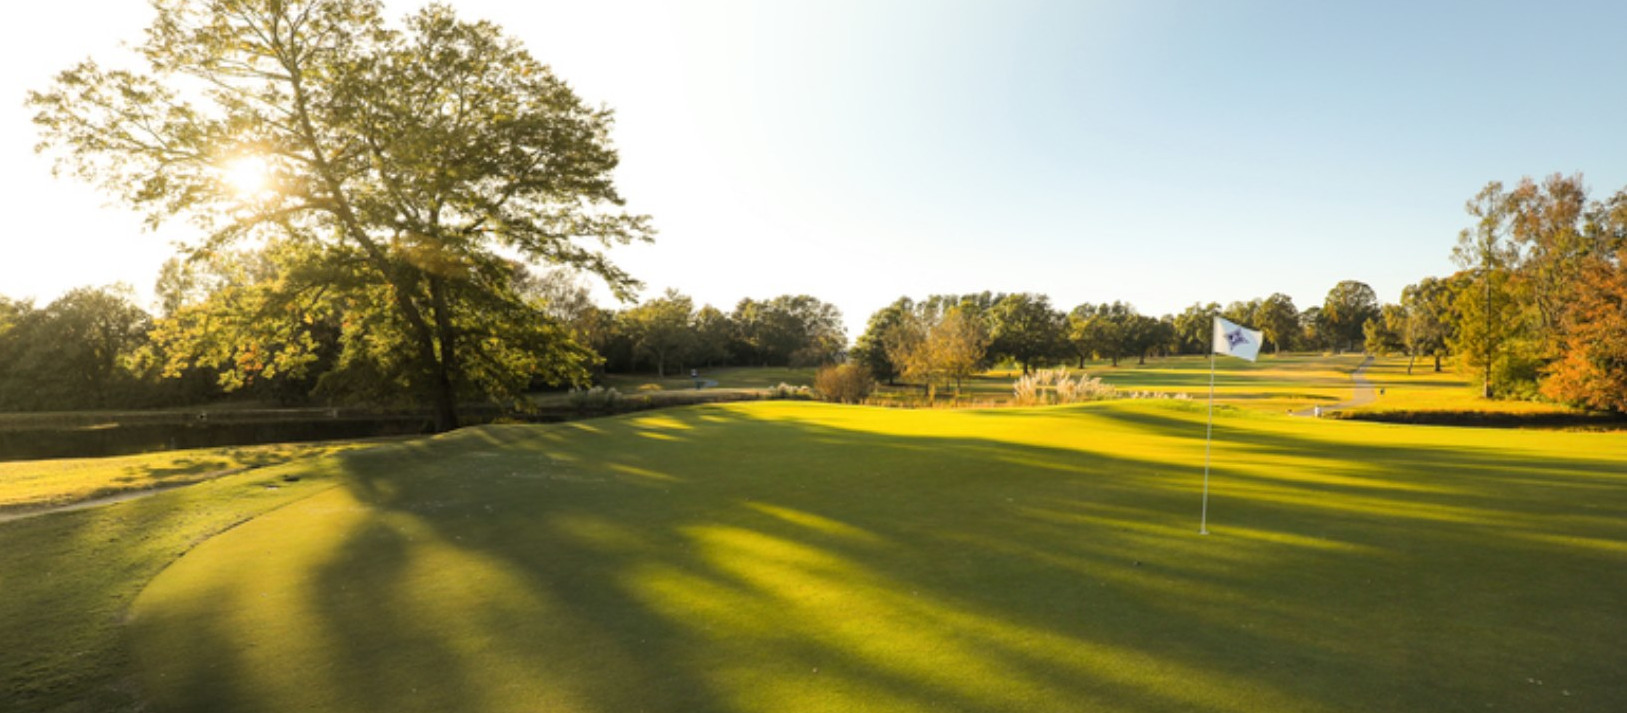 Golf Course in Greenville, SC, Public Golf Course Near Greenville, Berea,  Travelers Rest, Parker, SC